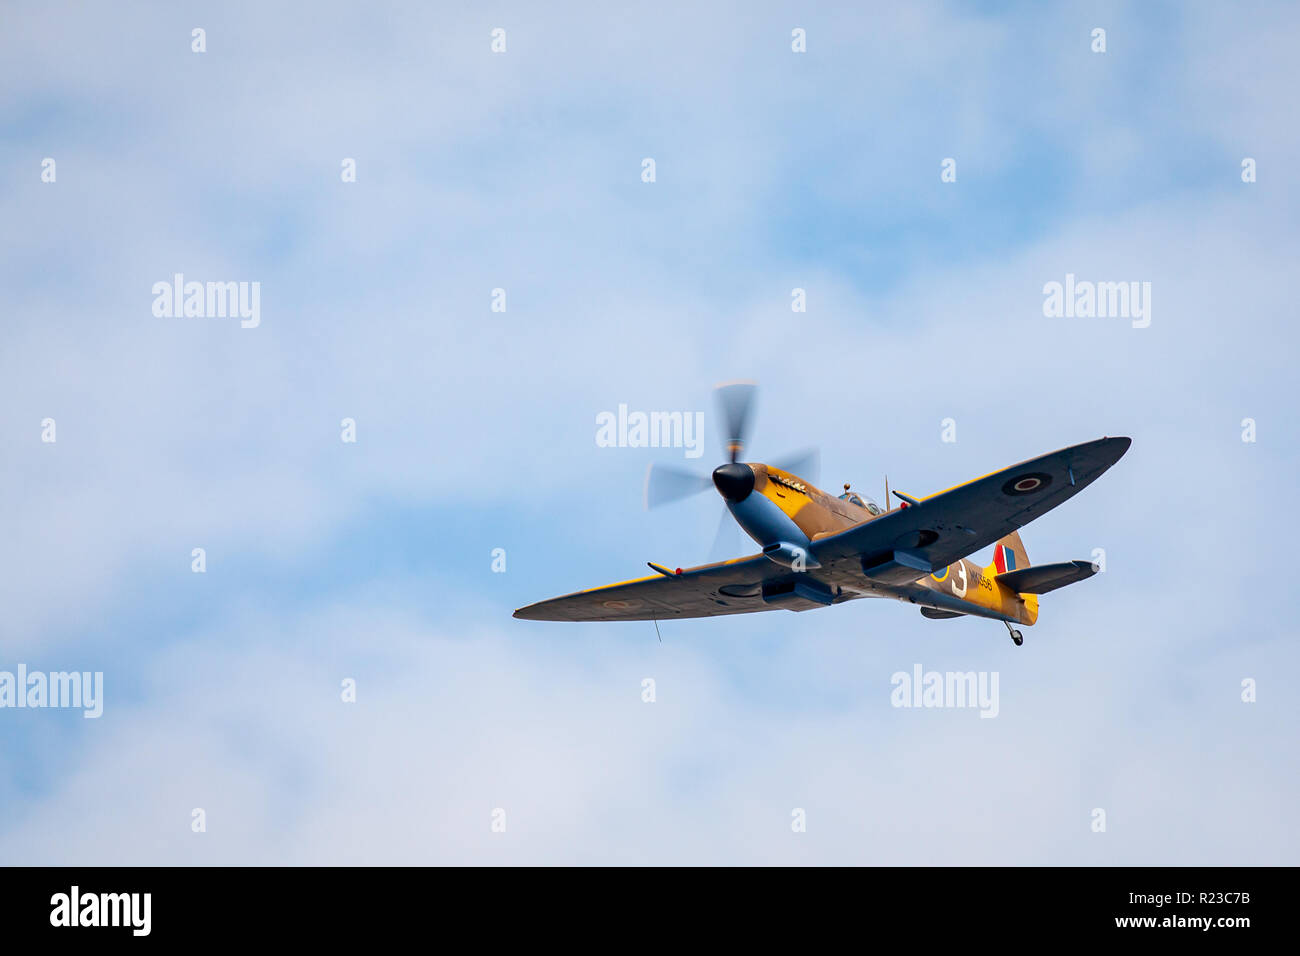 Supermarine Spitfire JG891 at RIAT Fairford 2018 Stock Photo